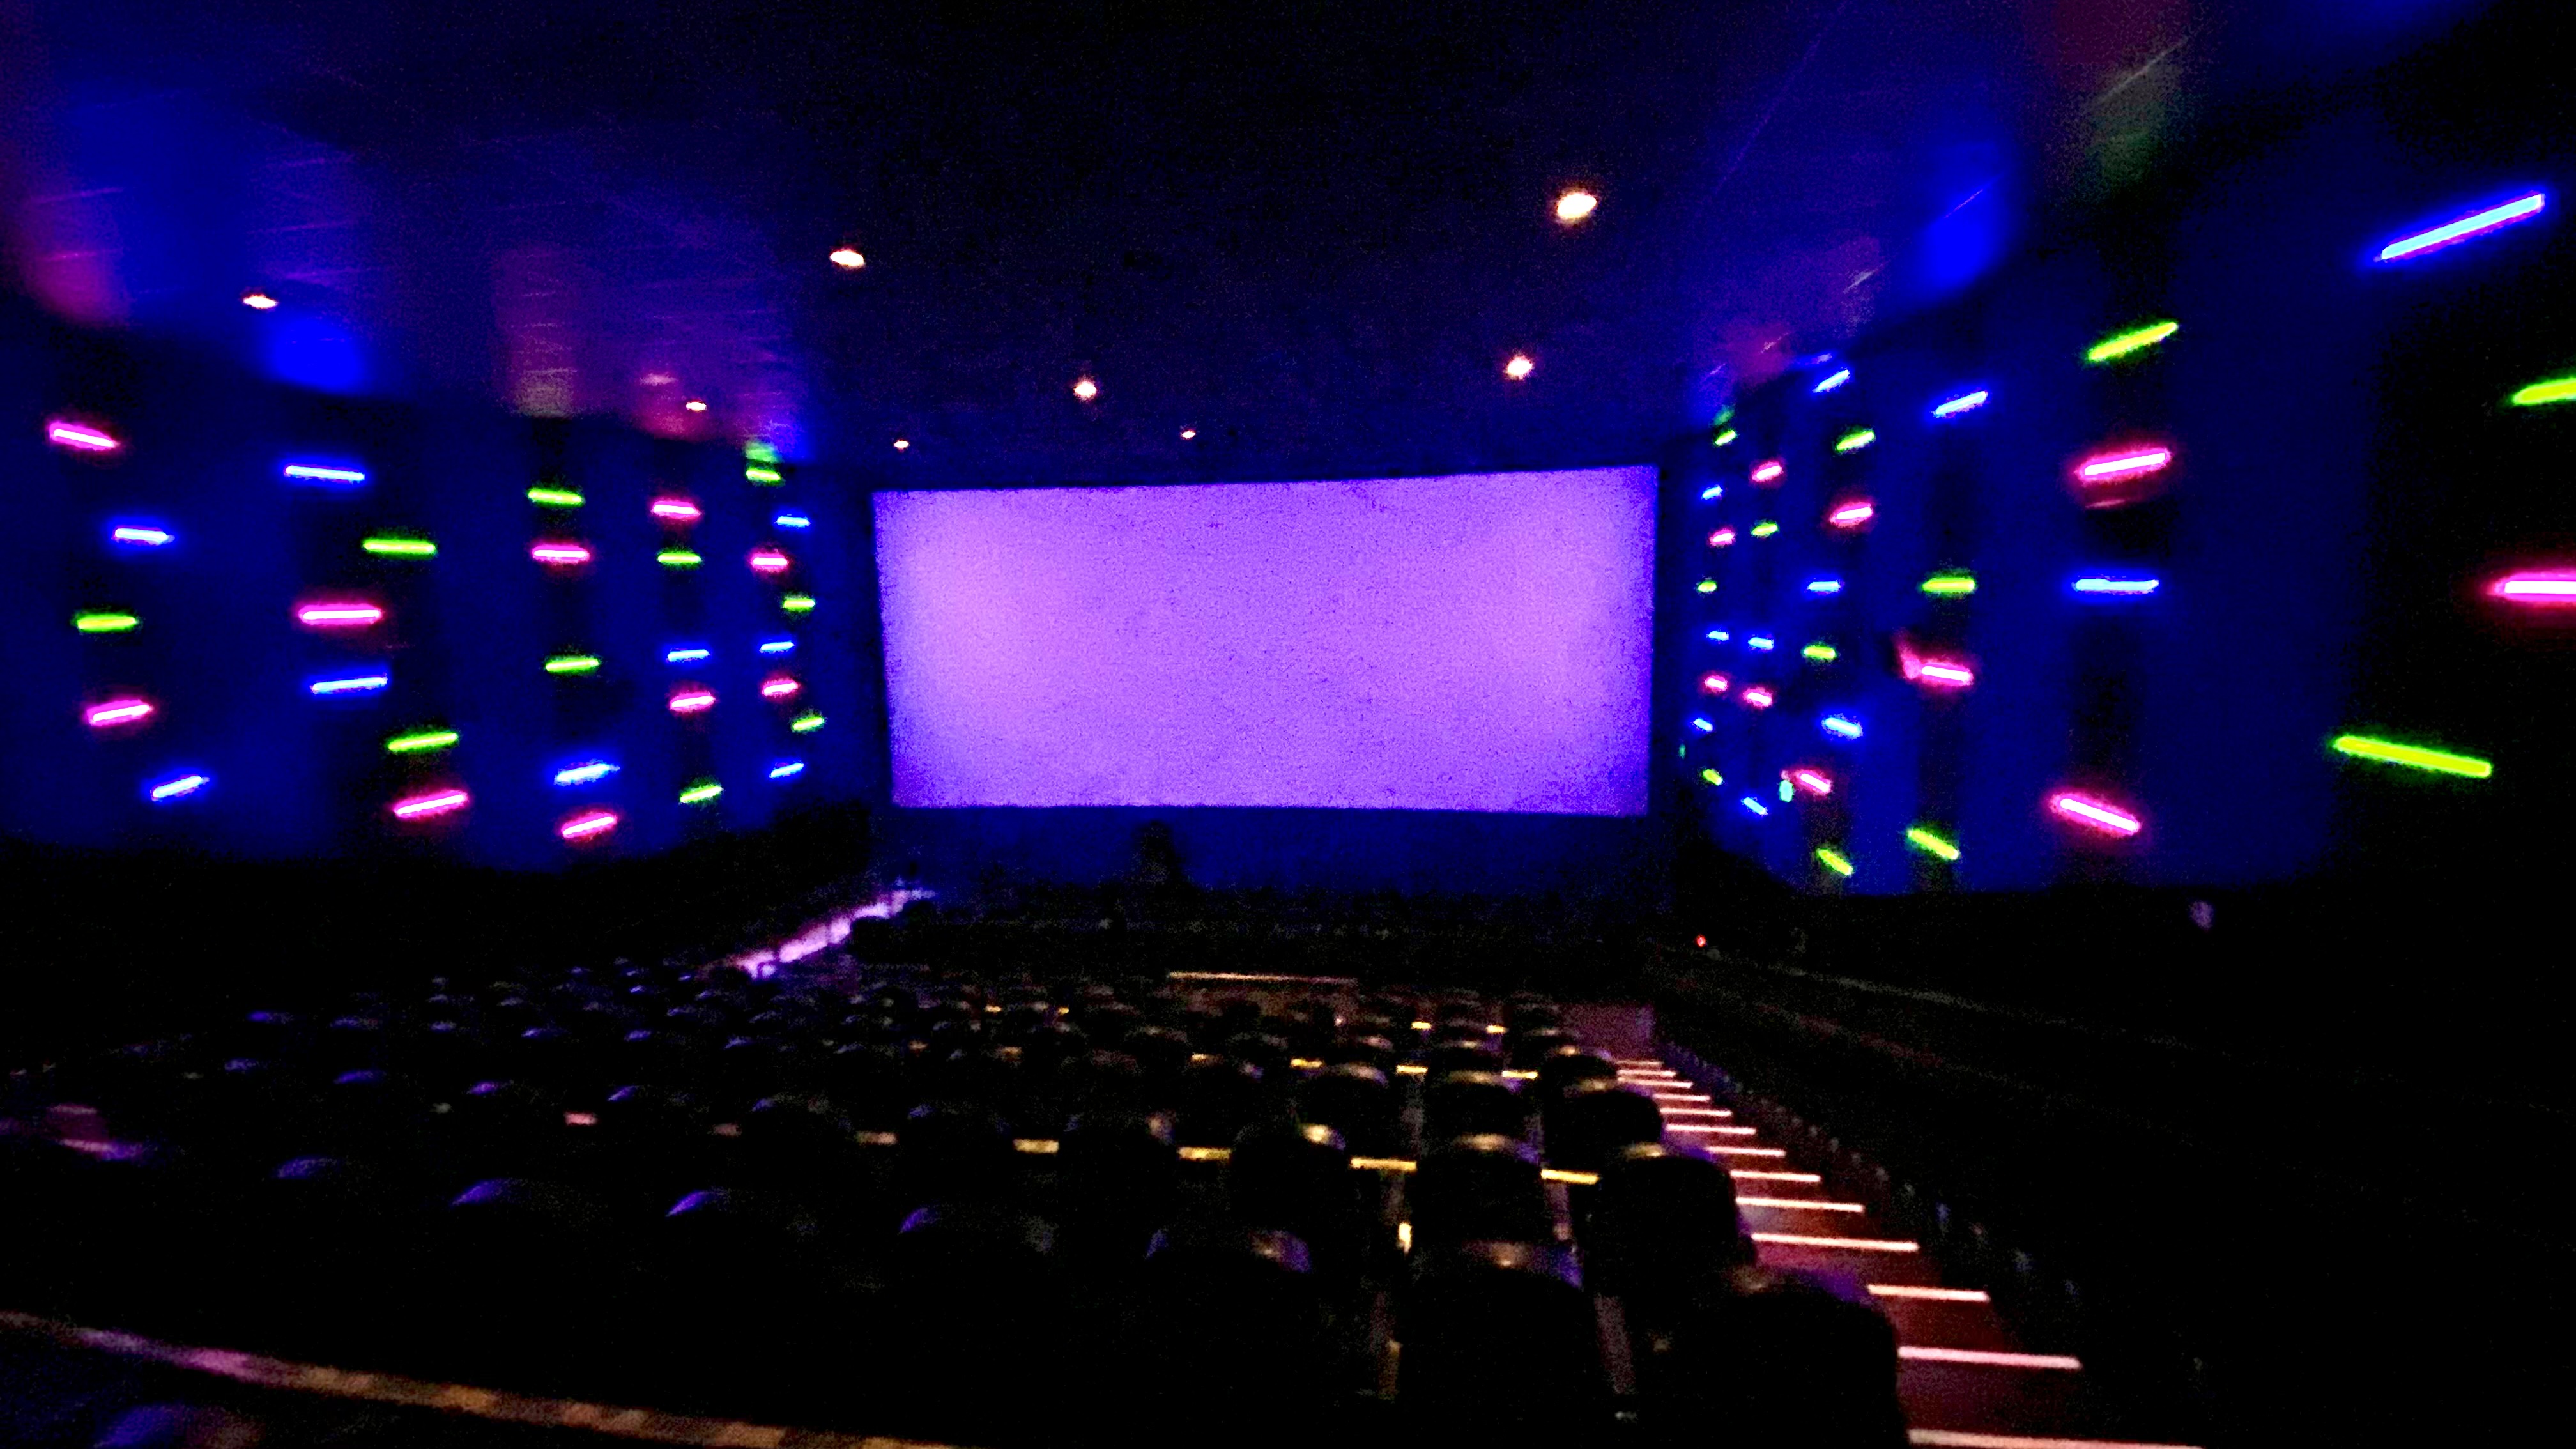 CineLux Almaden - Inside the theater